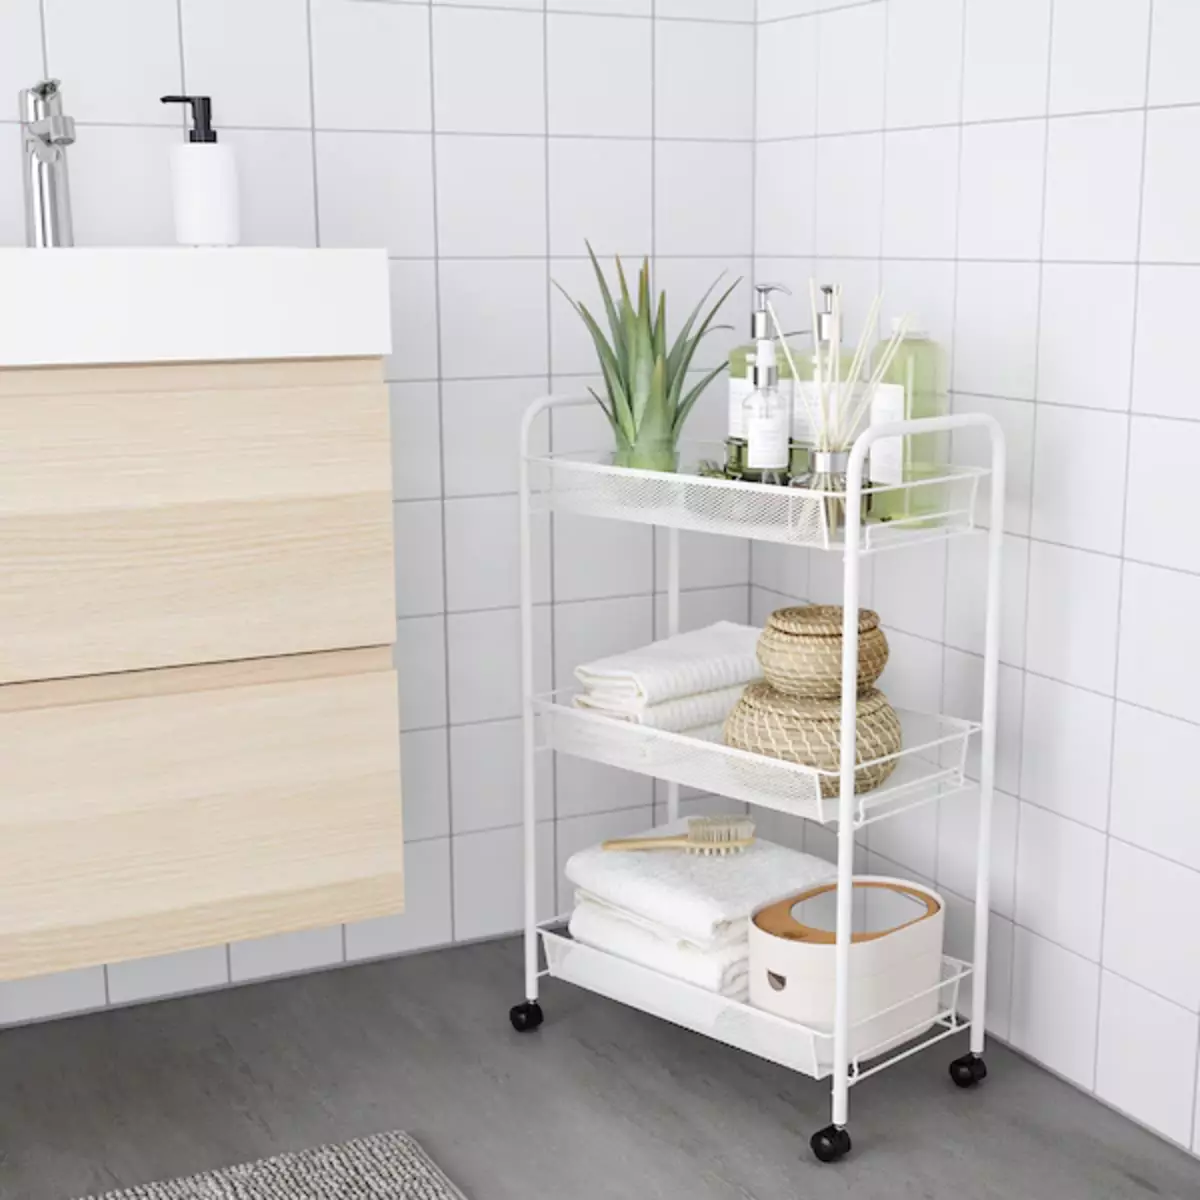 11 produk yang bermanfaat dari IKEA untuk mereka yang ingin membuat kamar mandi untuk bersantai 7050_83